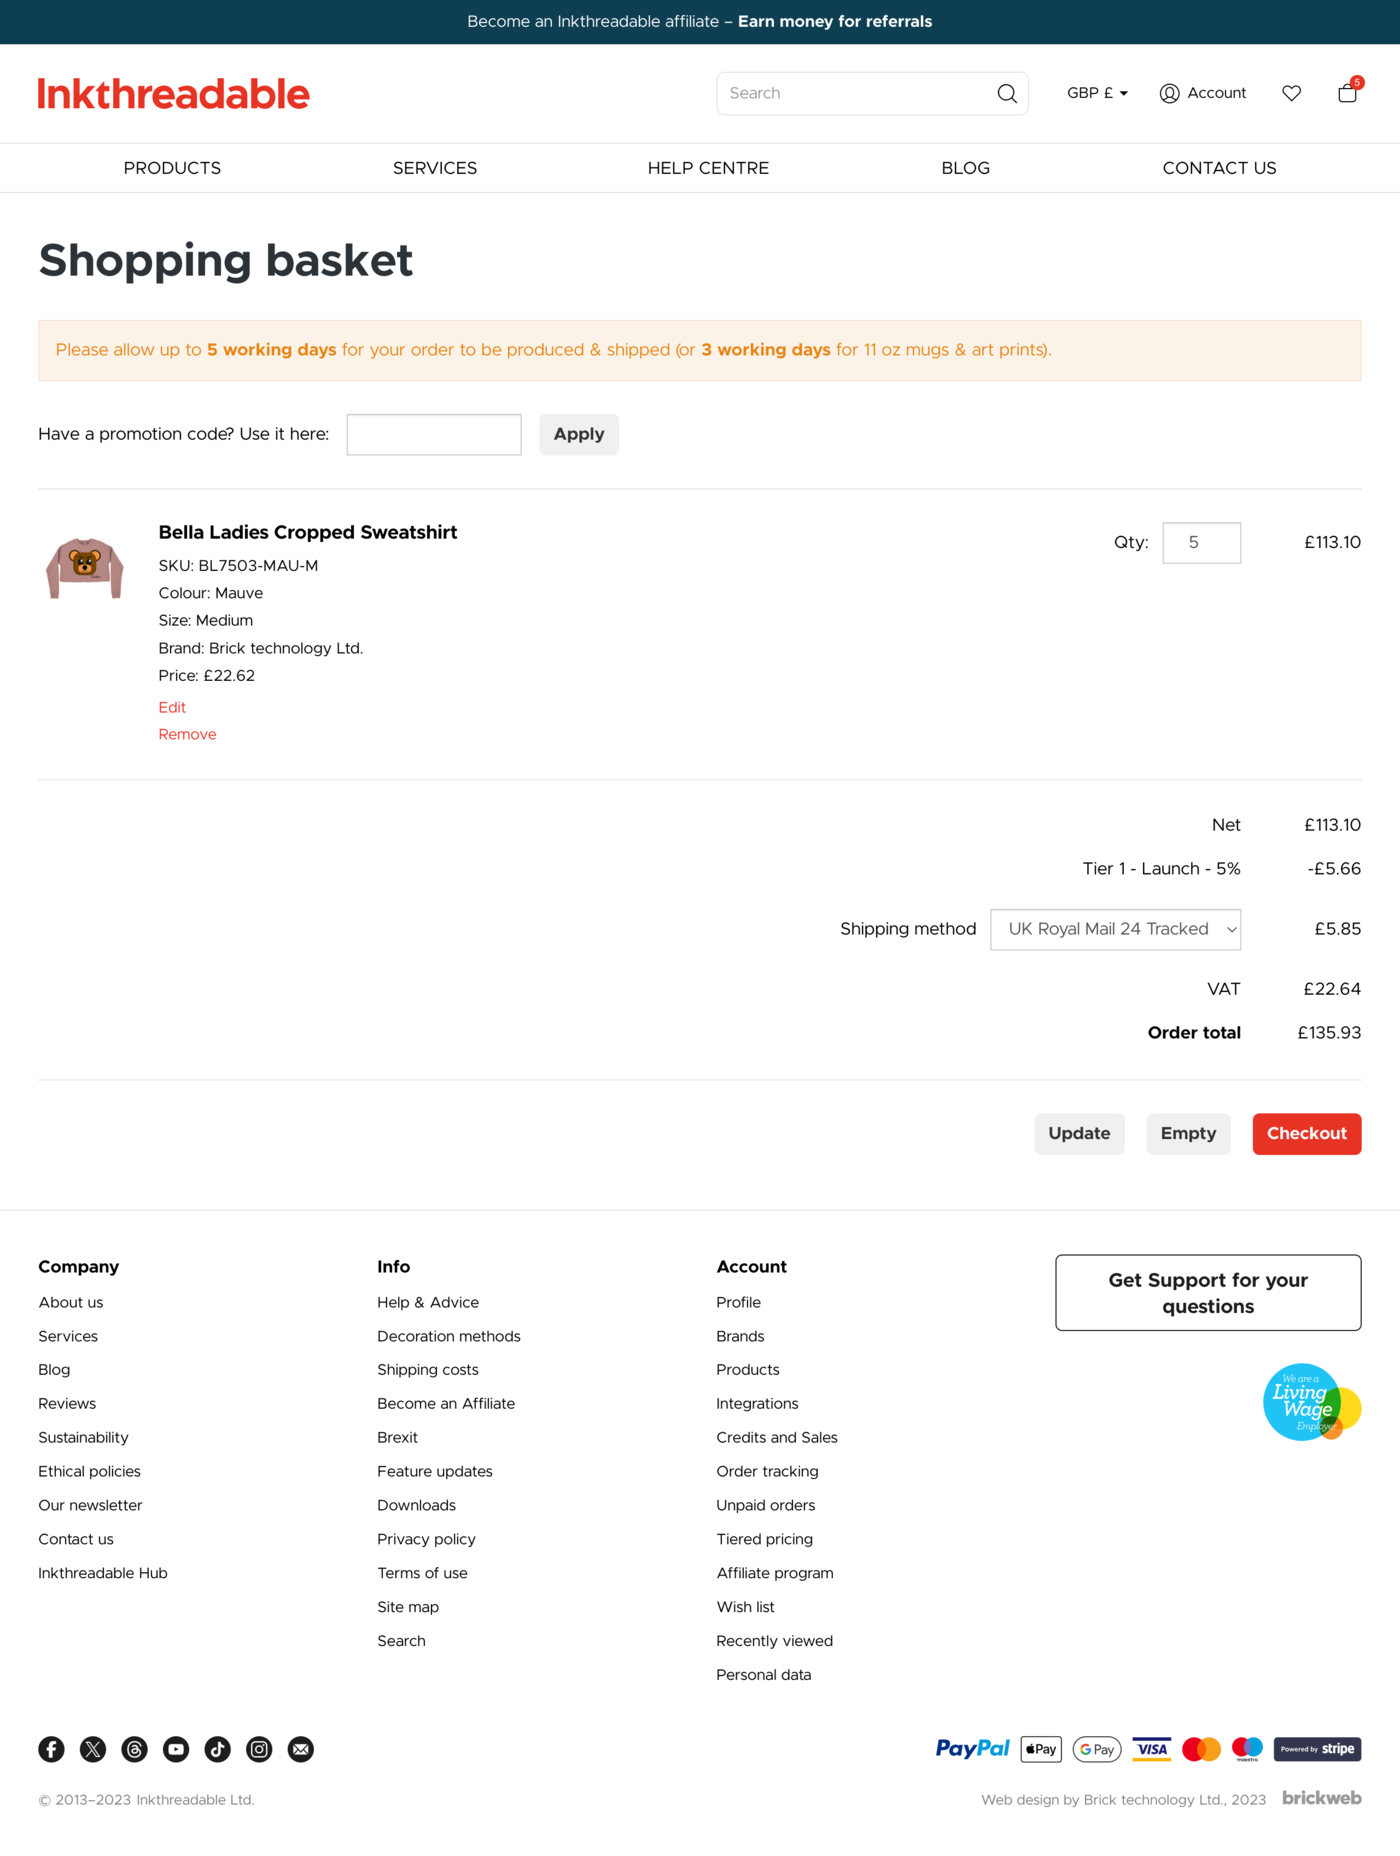 Inkthreadable Shopping basket